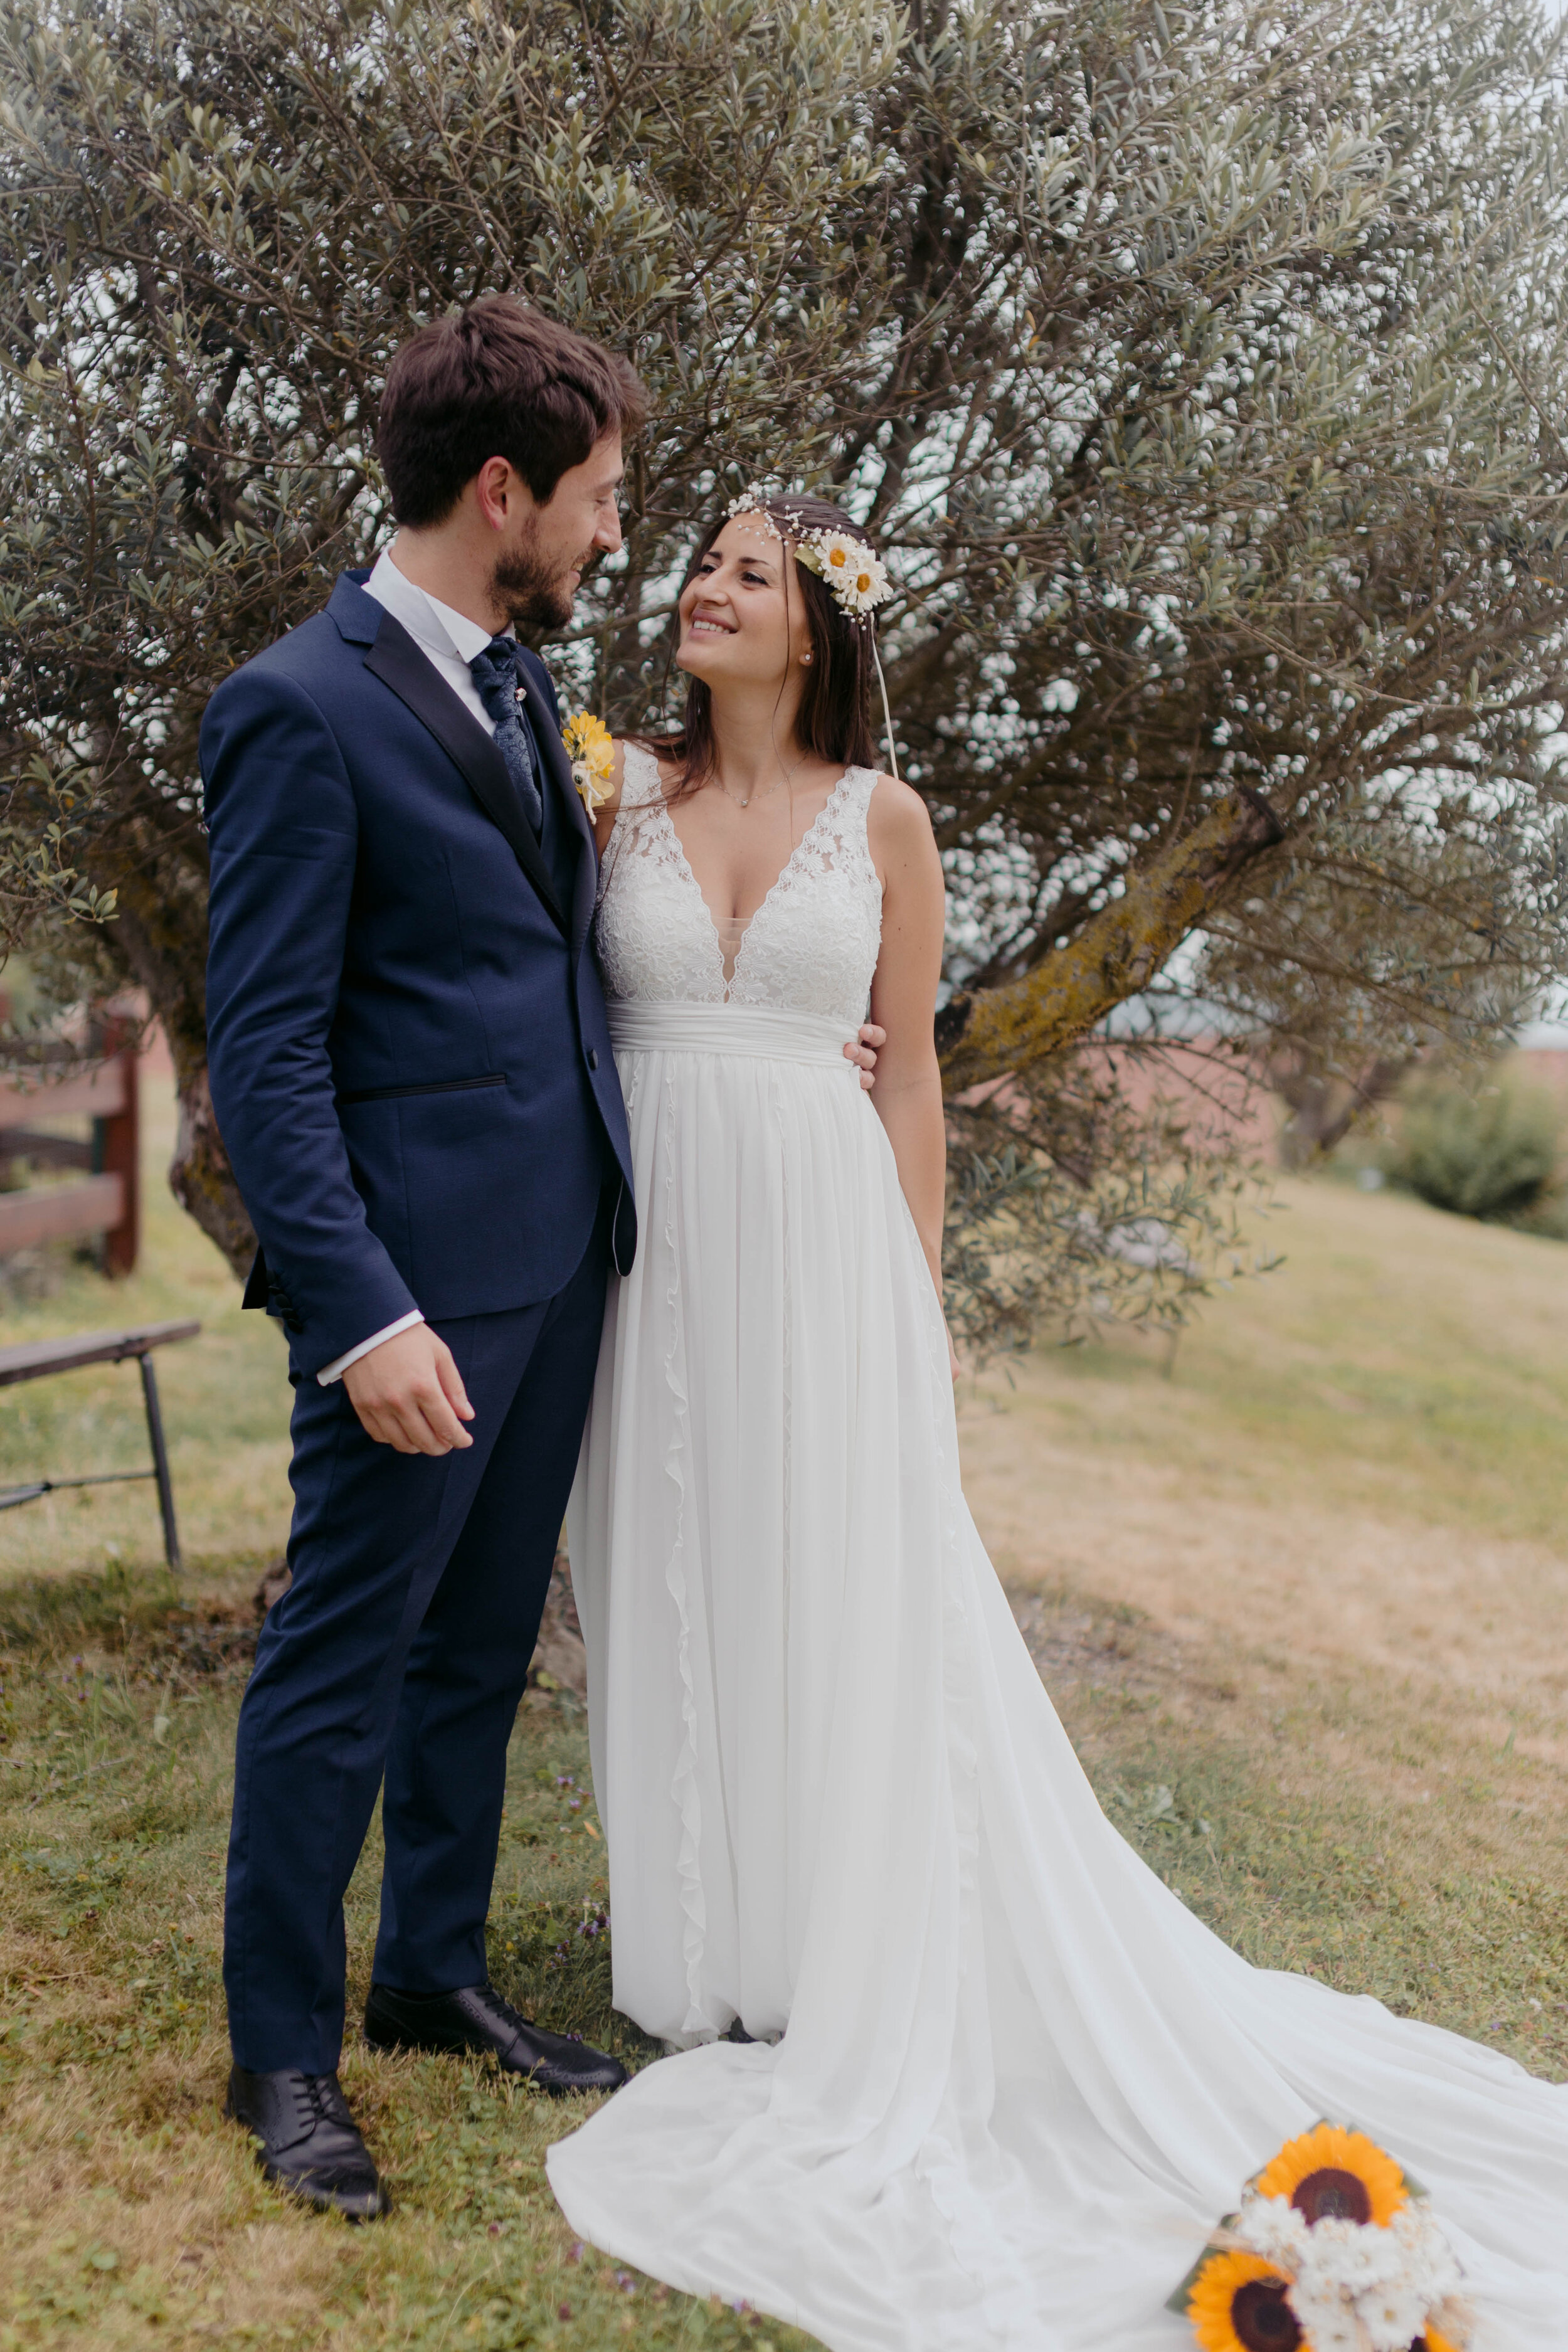 039 - Matrimonio a Cascina Rovet - Biella - Miriam Callegari Fotografa.JPG